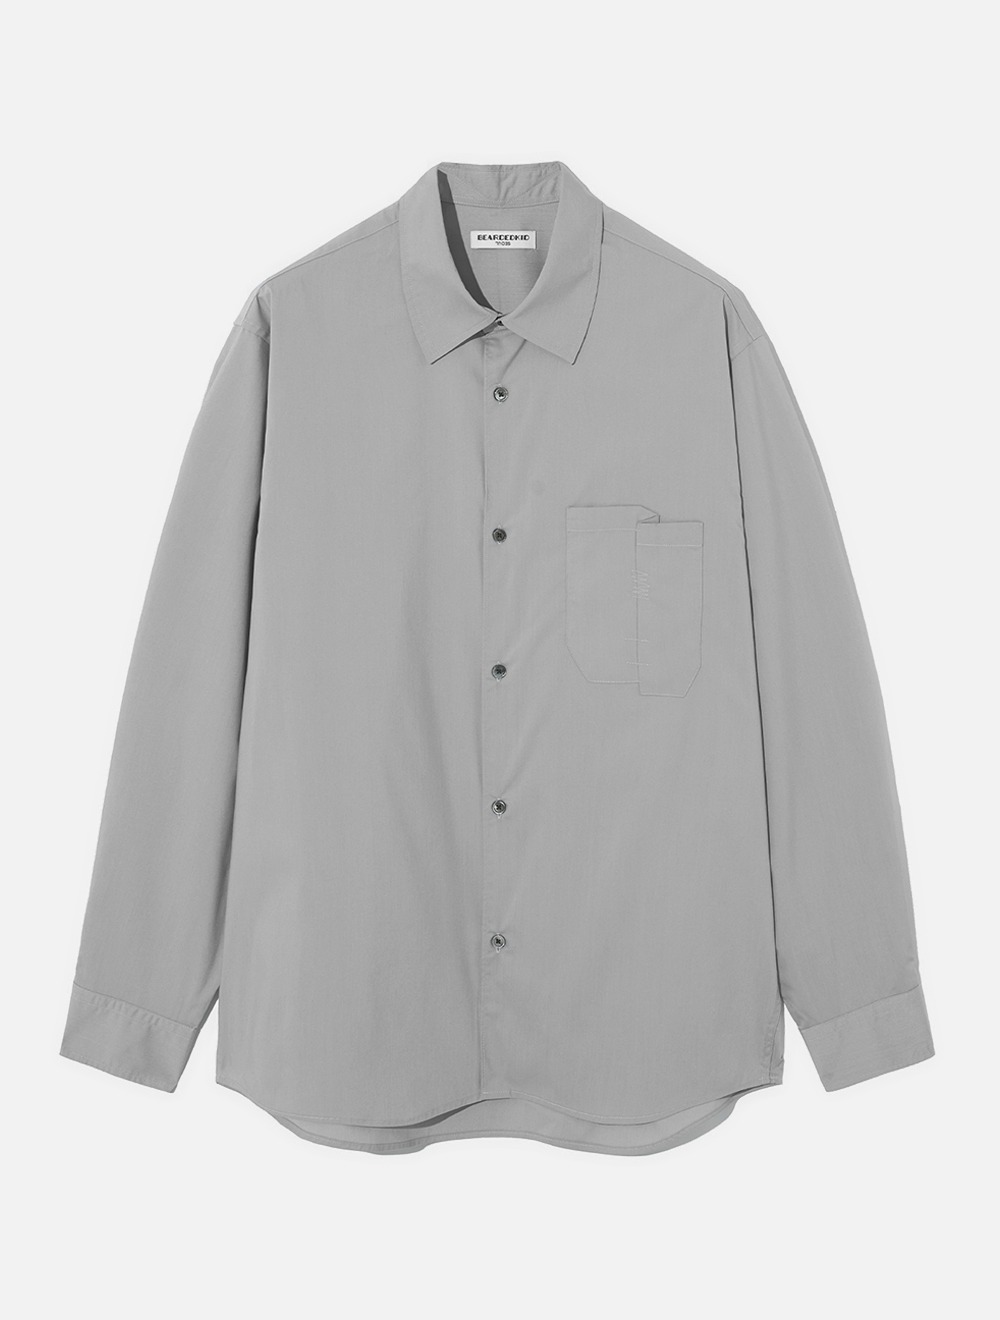 Silhouette Shirt_Light Grey